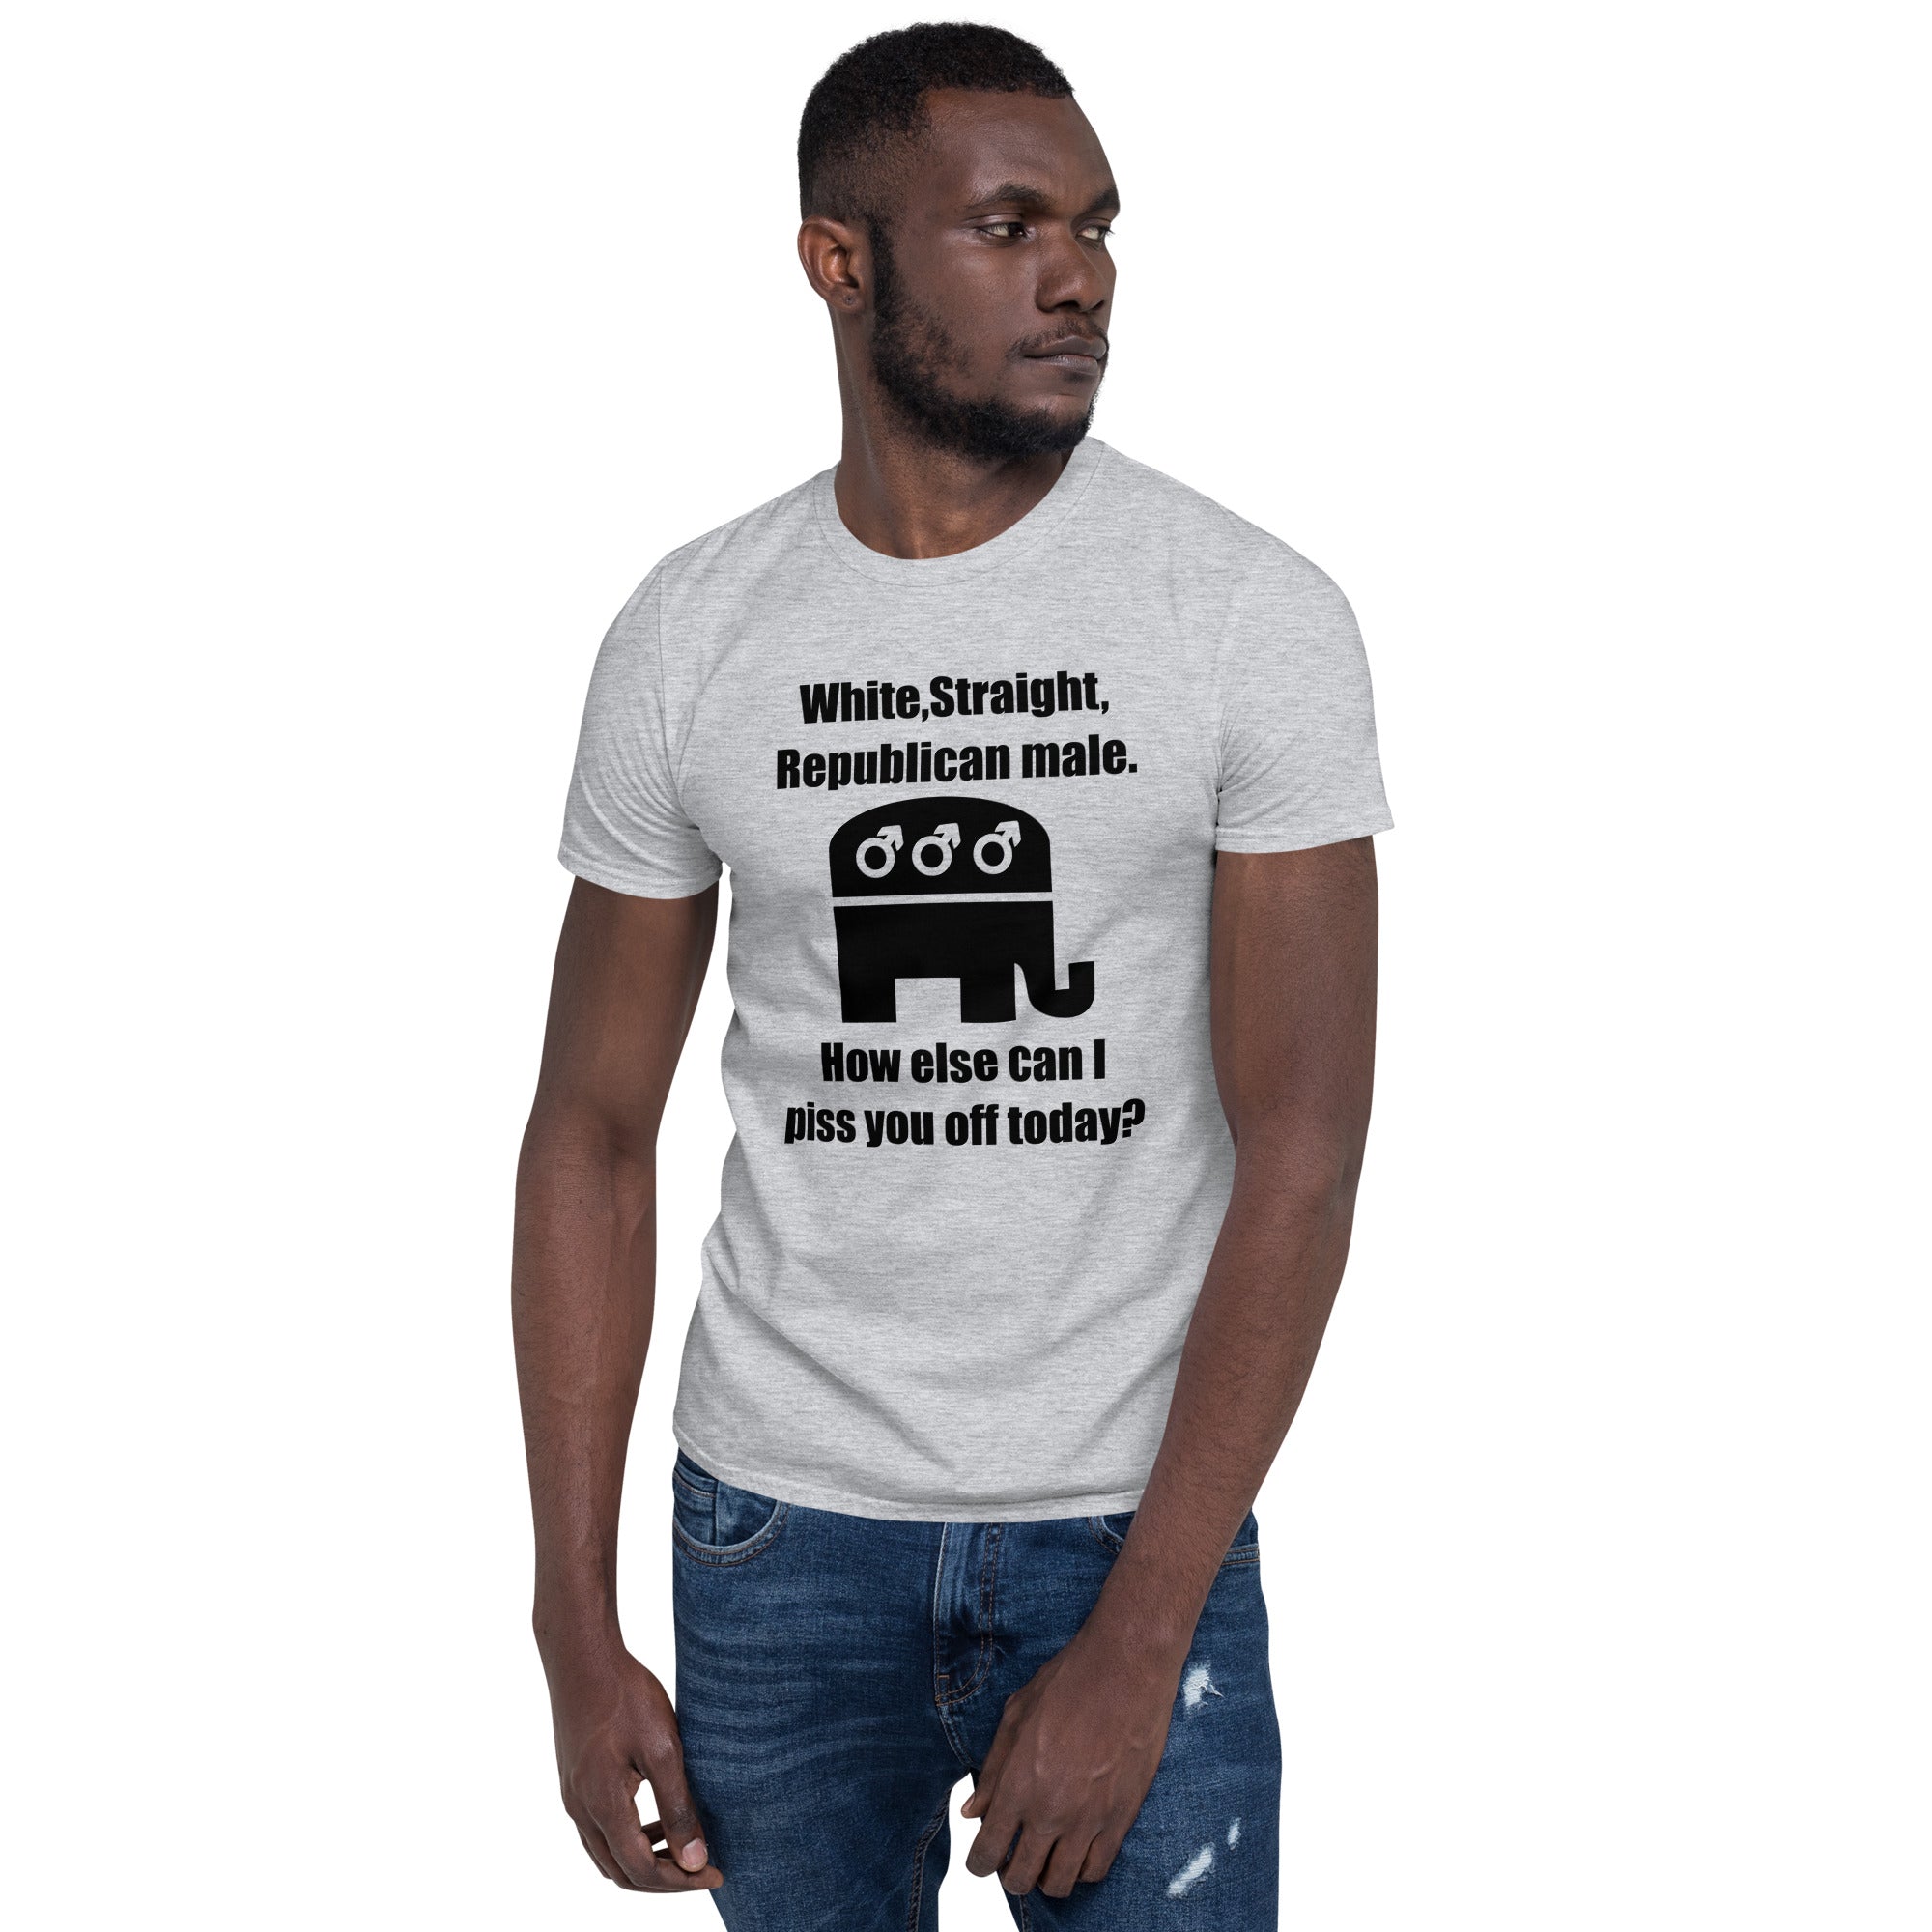 White Straight Republican Male - Short-Sleeve Unisex T-Shirt